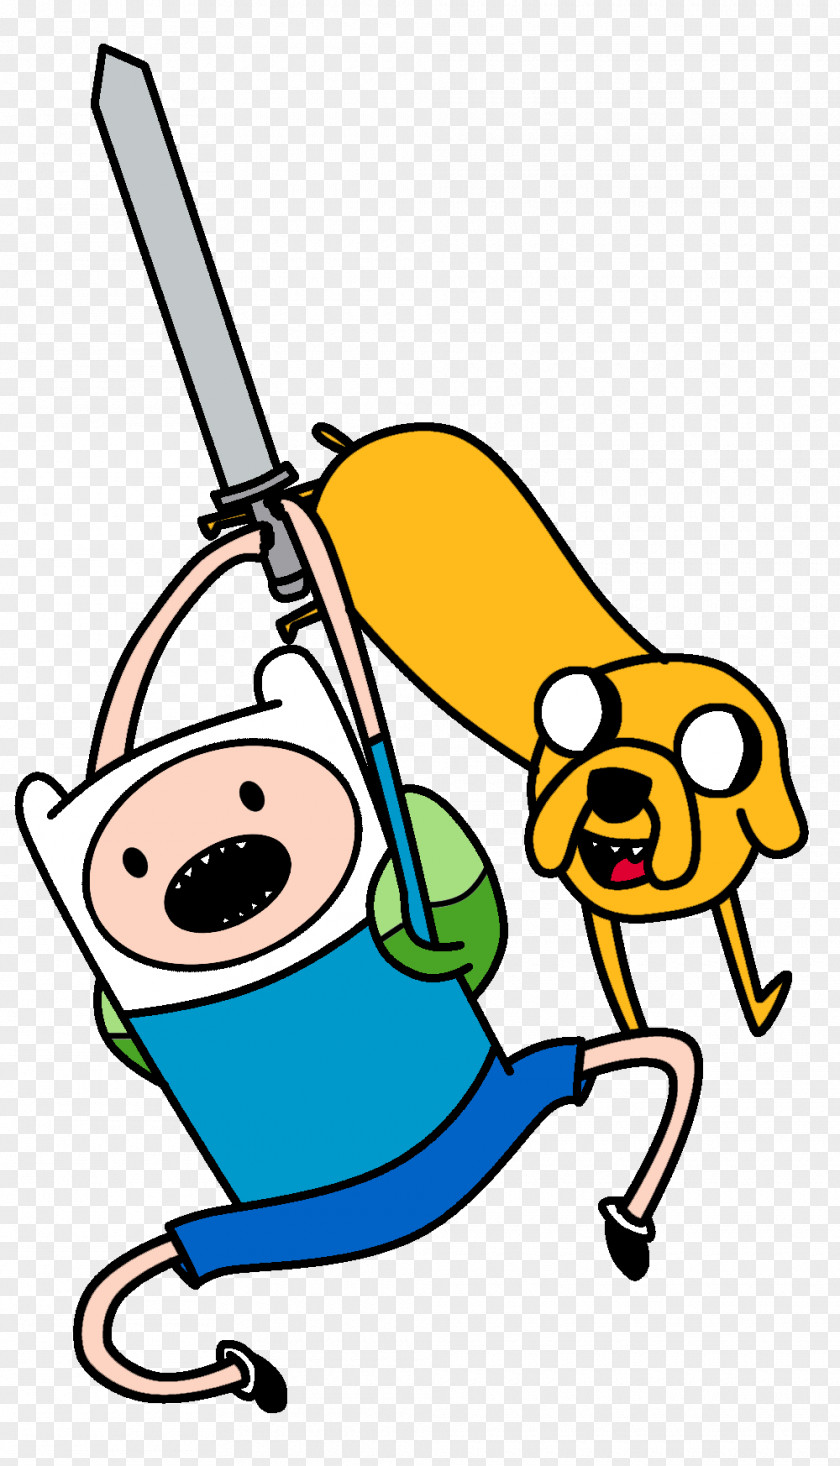 Adventure Time Finn The Human Marceline Vampire Queen Jake Dog Flame Princess Cartoon Network PNG